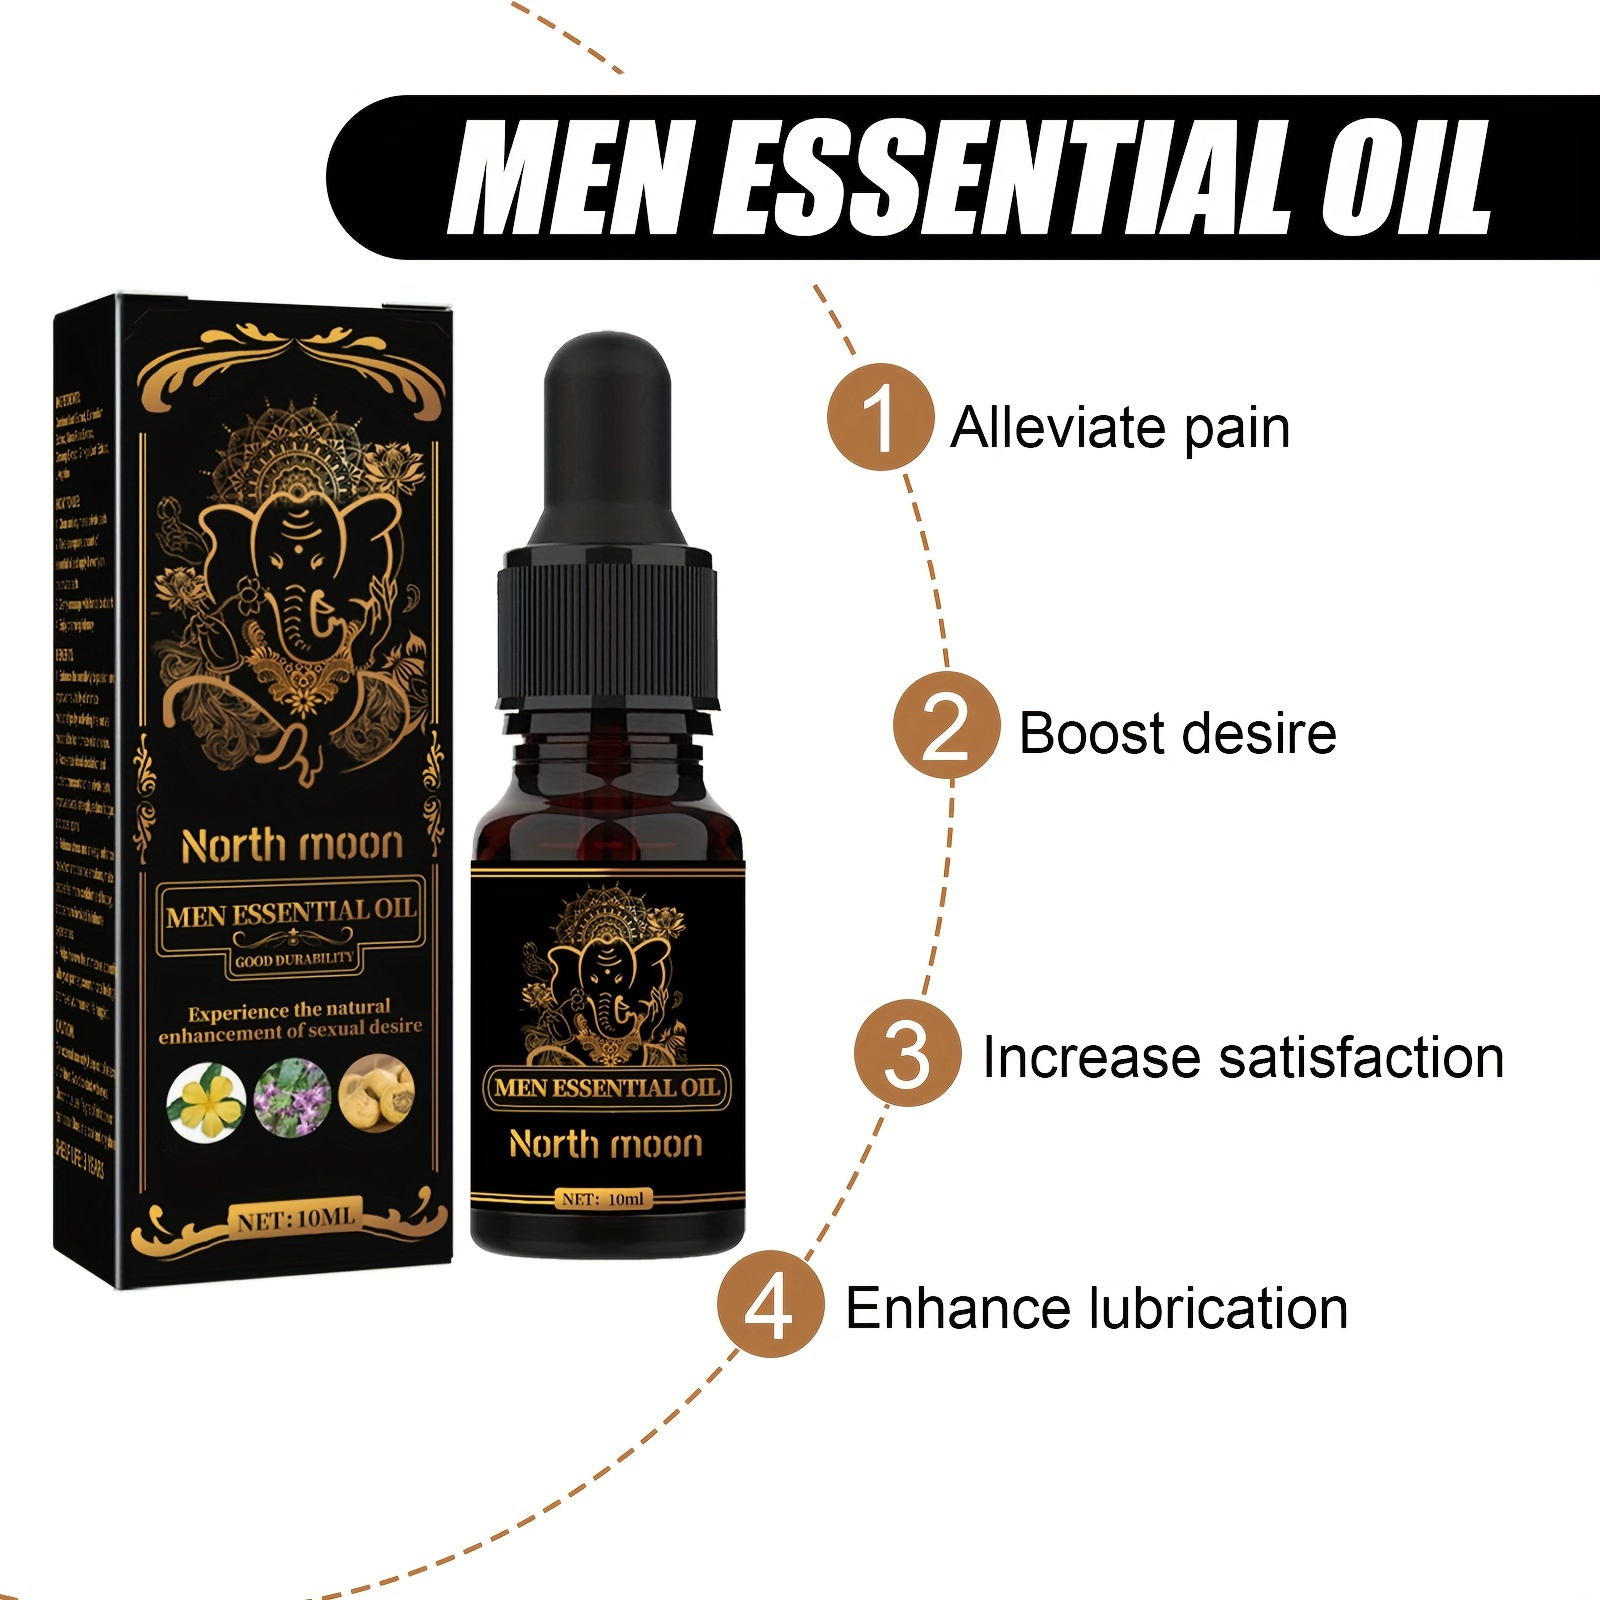 1pc South Moon Men's Essential Oil Private Parts Massage